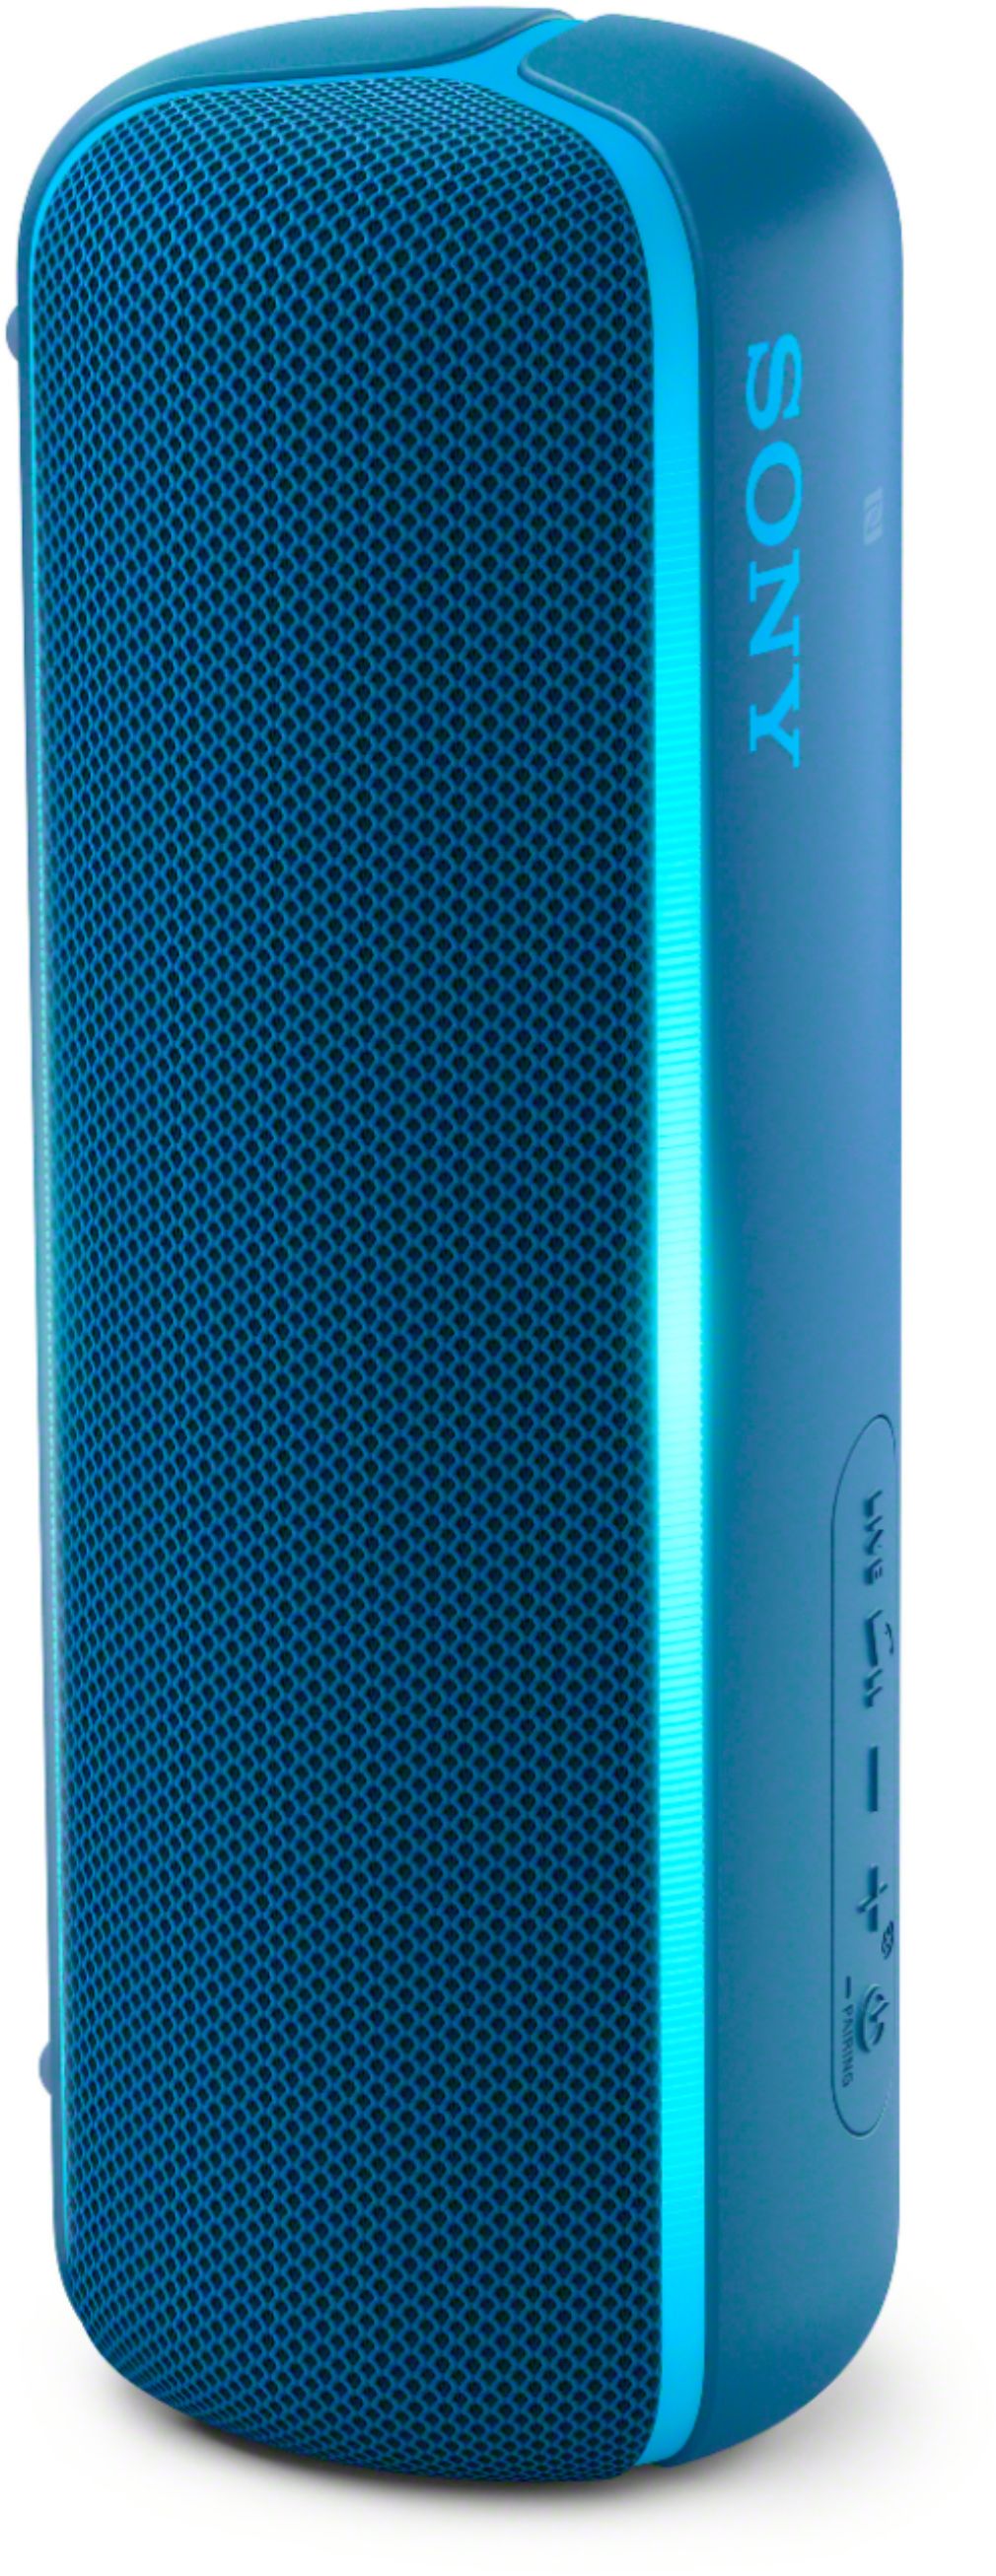 sony bluetooth speaker xb22